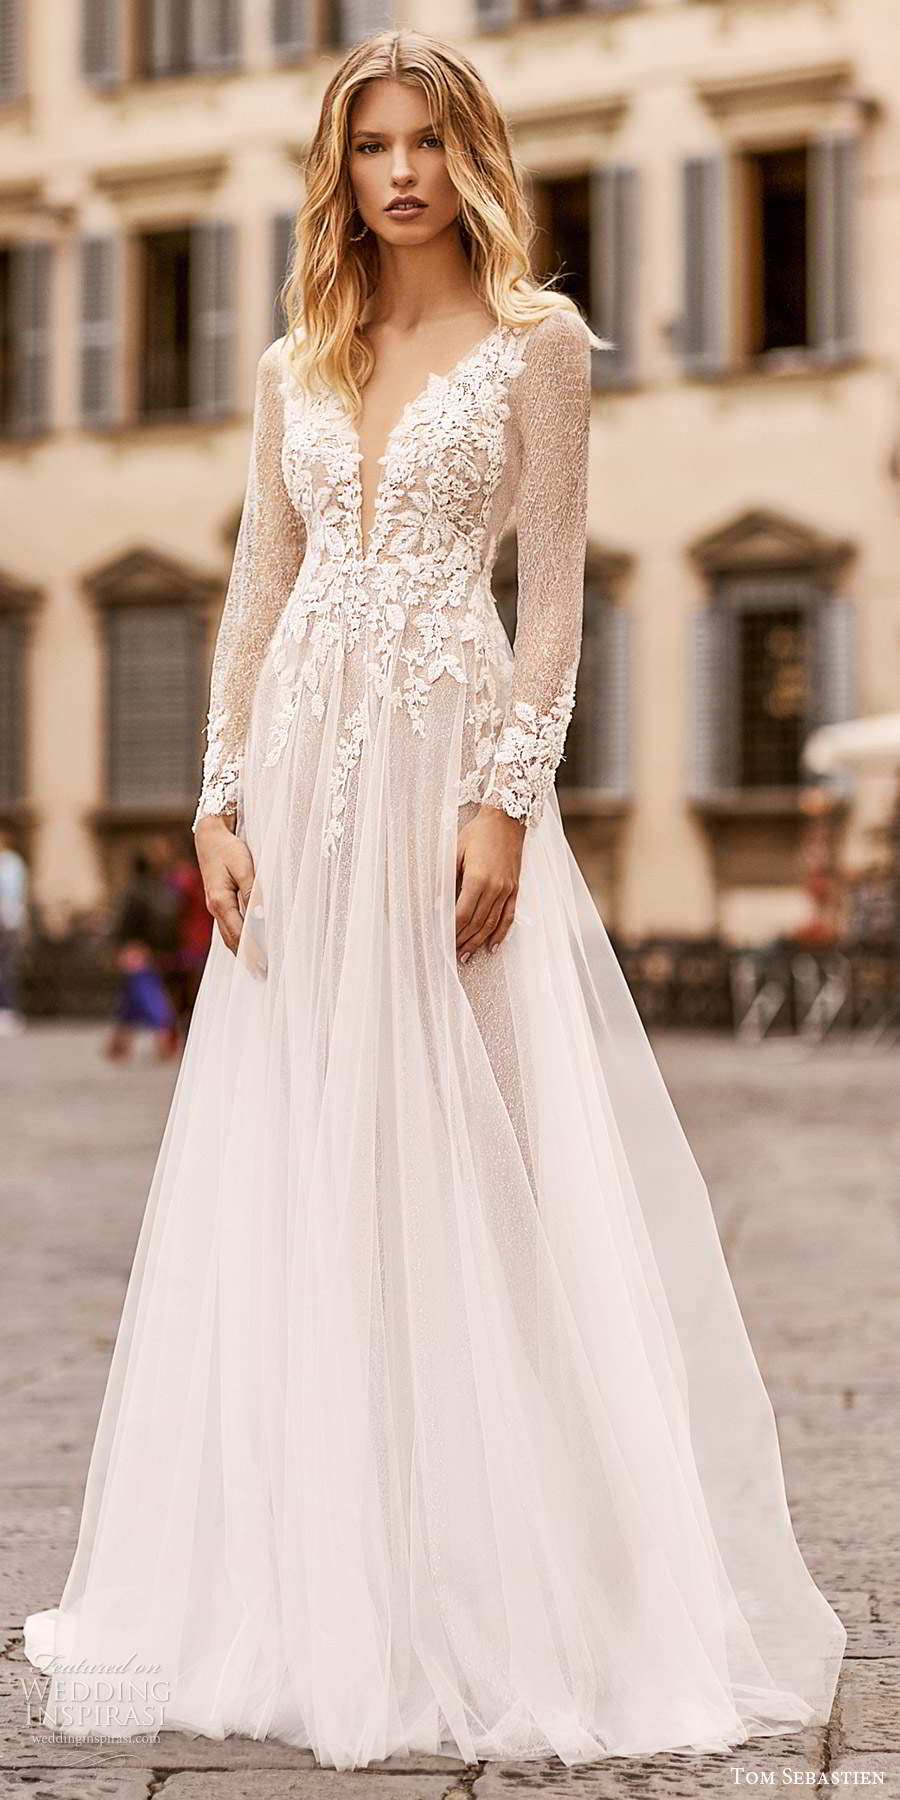 tom sebastien 2020 bridal illusion long sleeves plunging neckline heavily embellished bodice a line ball gown wedding dress chapel train (16) mv